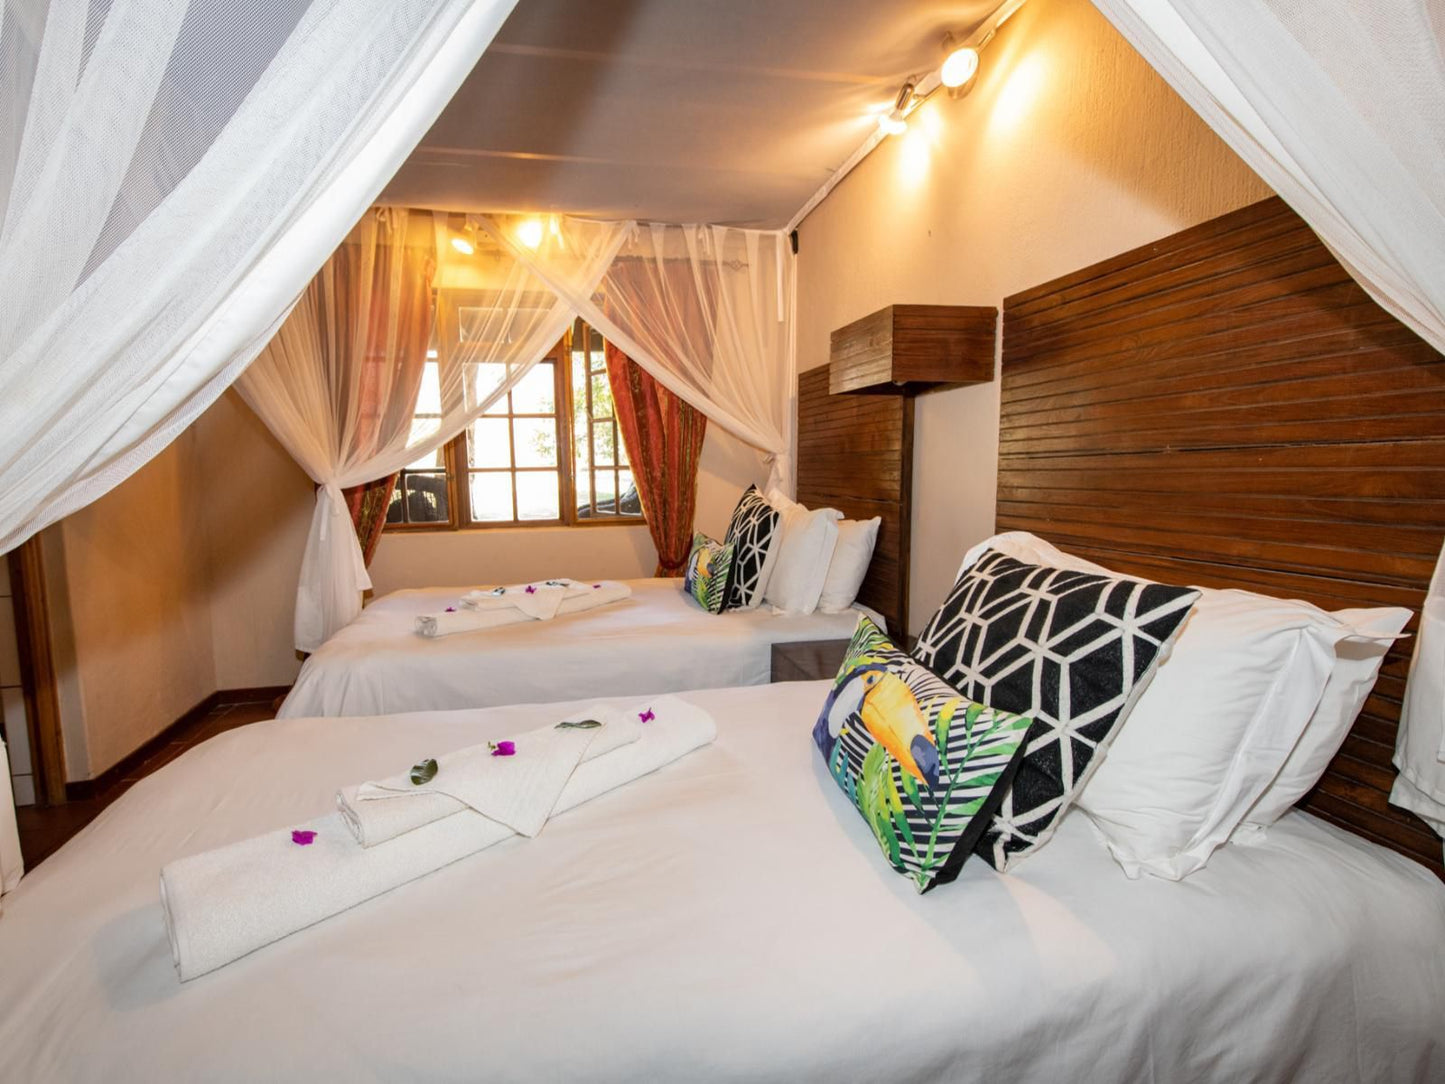 Blyde River Canyon Lodge Hoedspruit Limpopo Province South Africa Bedroom